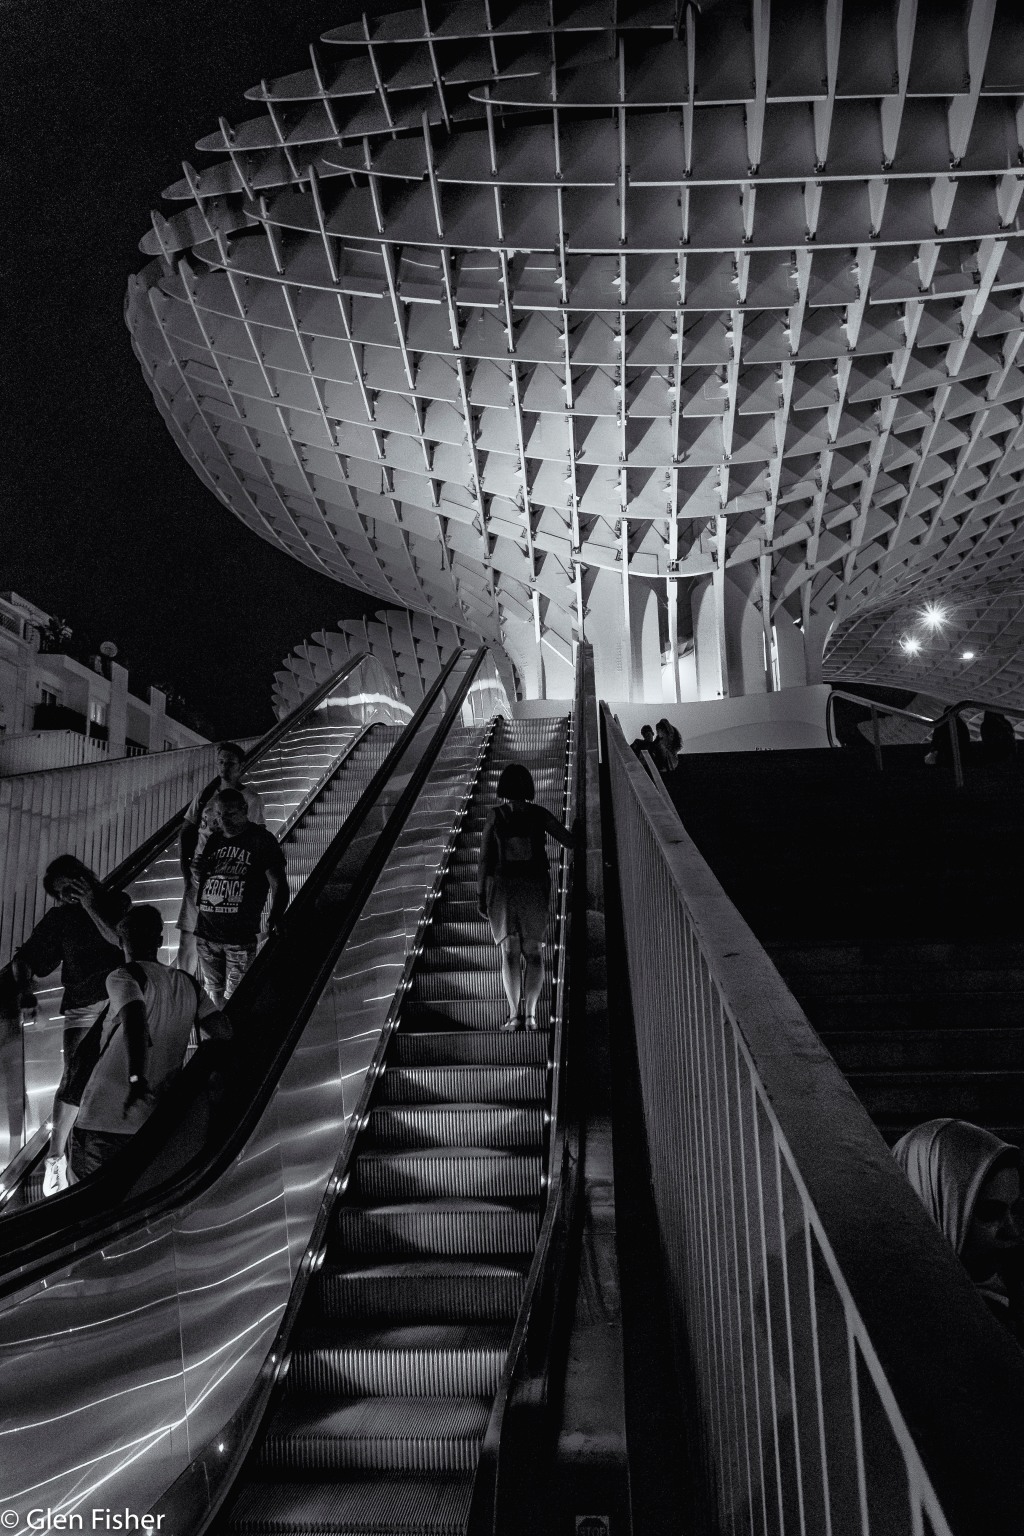 The Metropol Parasol, Sevilla – Three Images